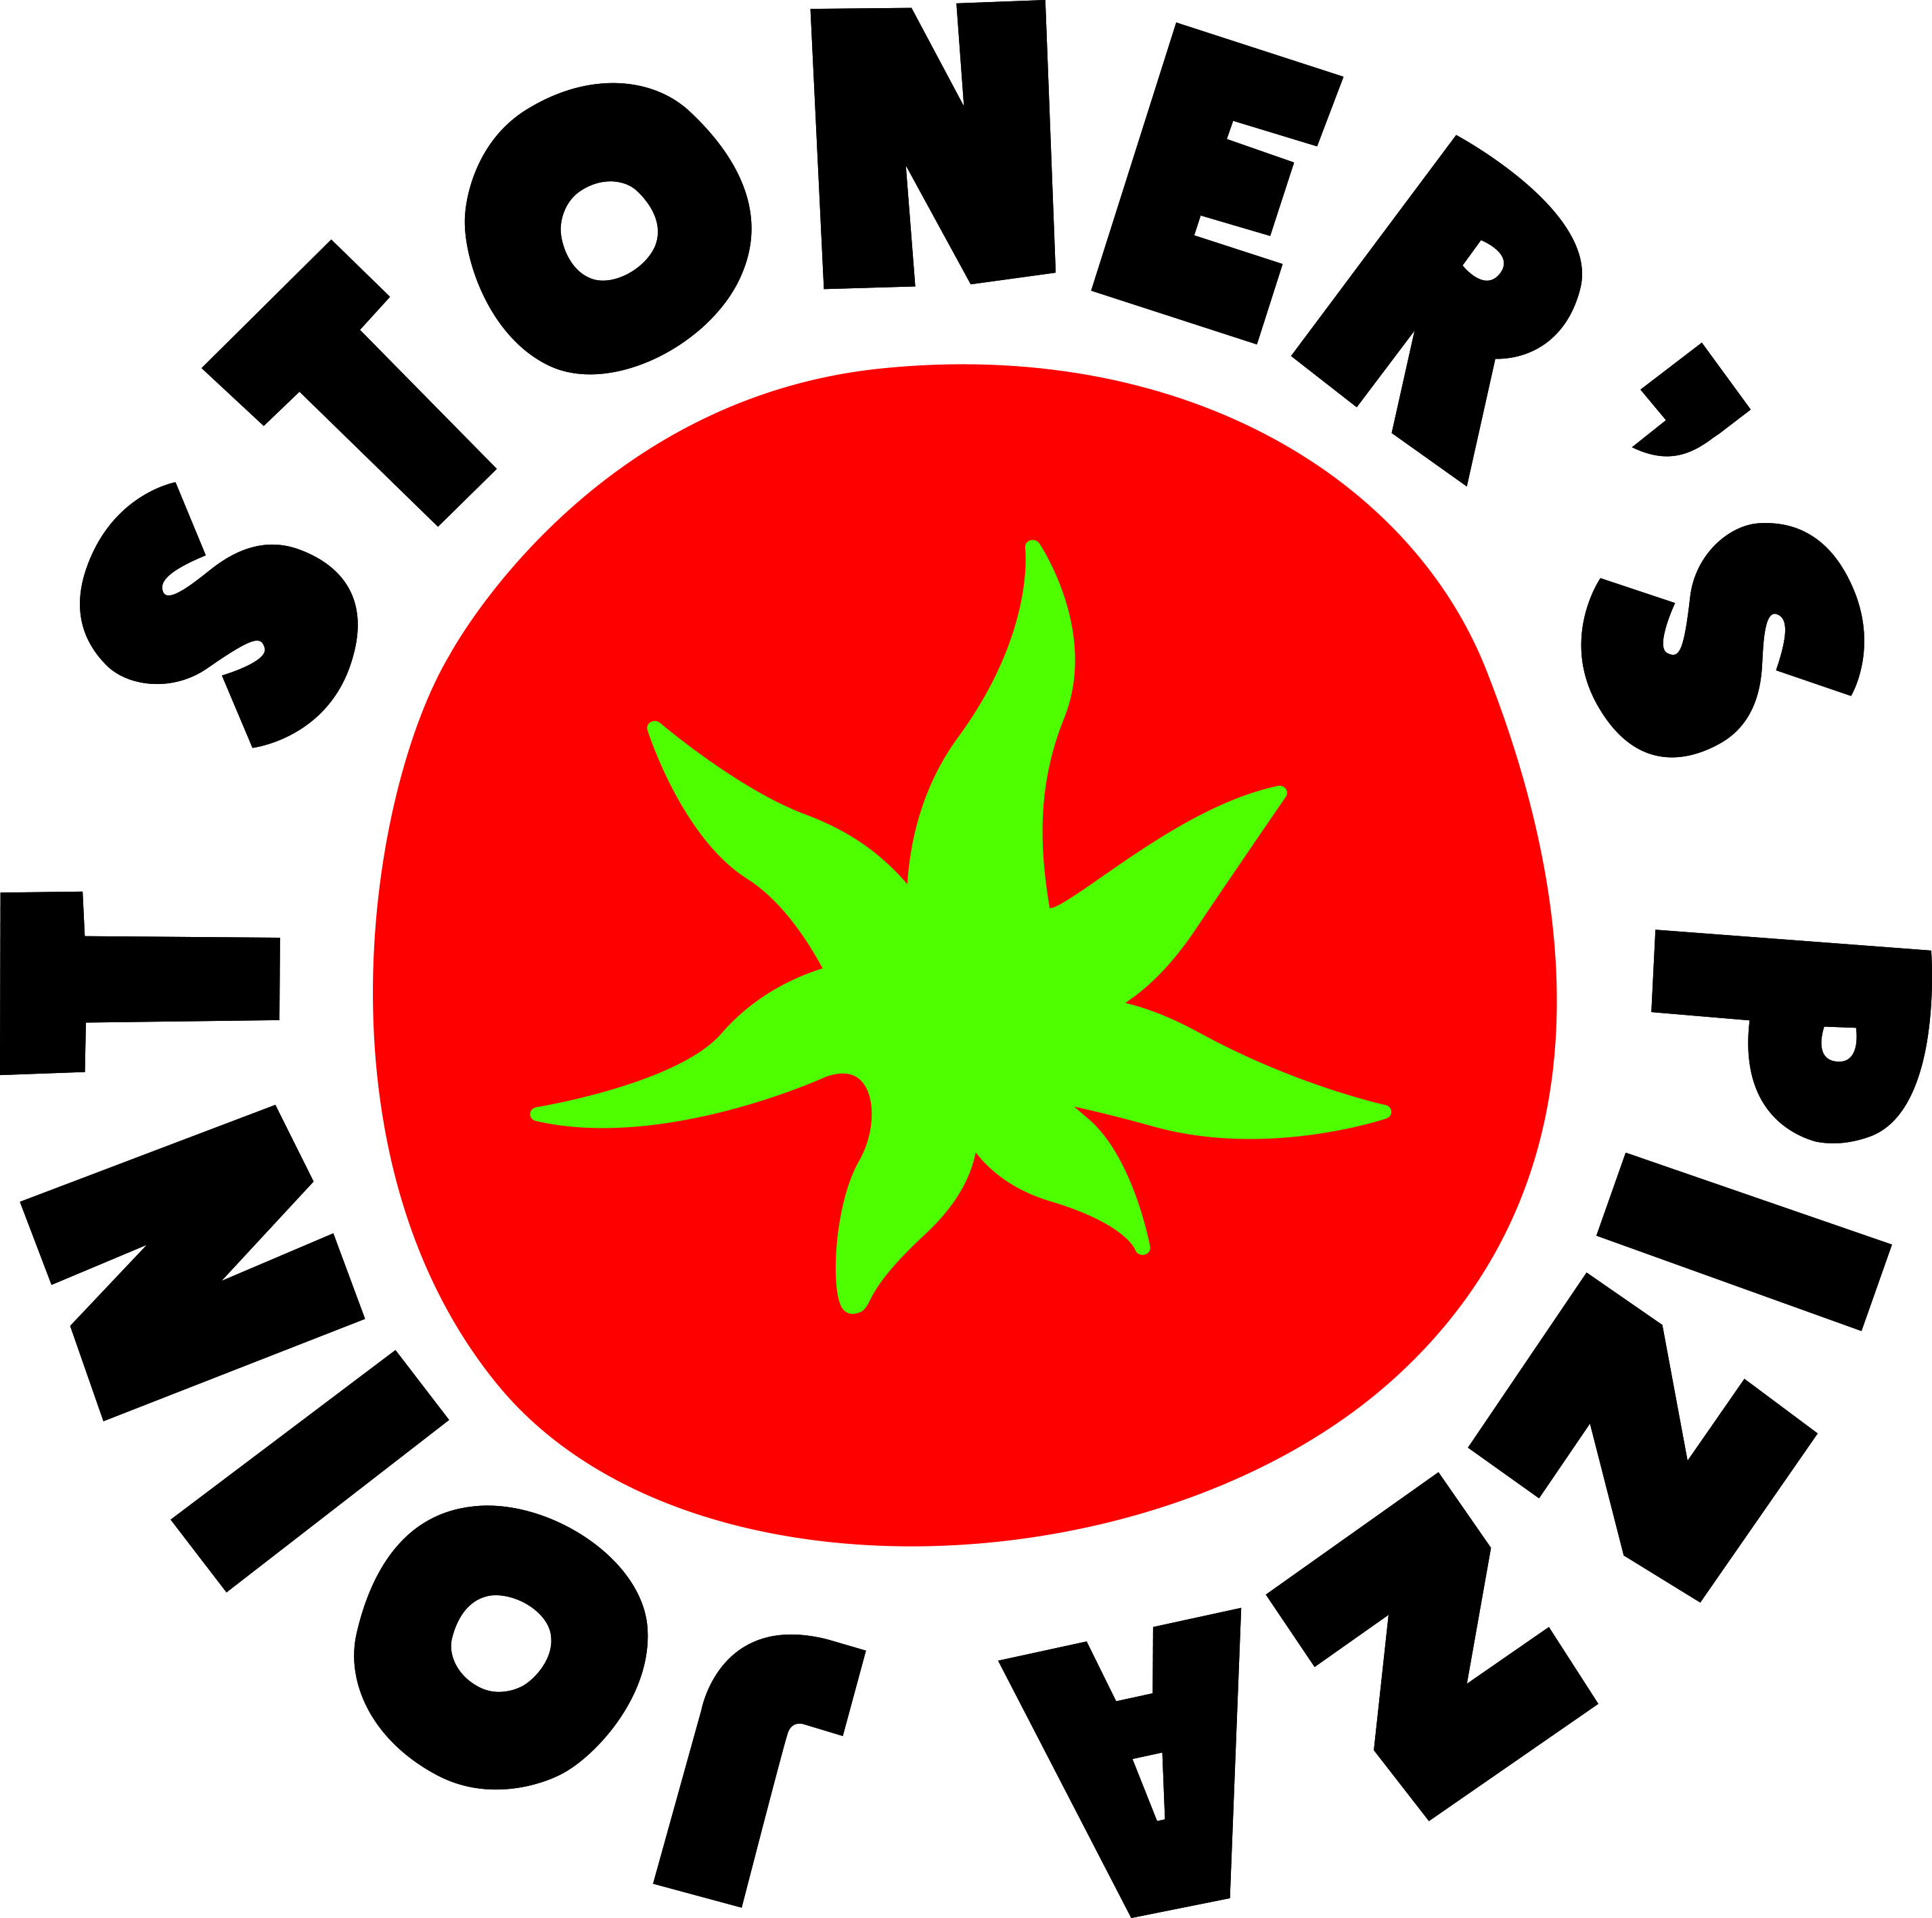 Stoner’s Pizza Joint Audit 